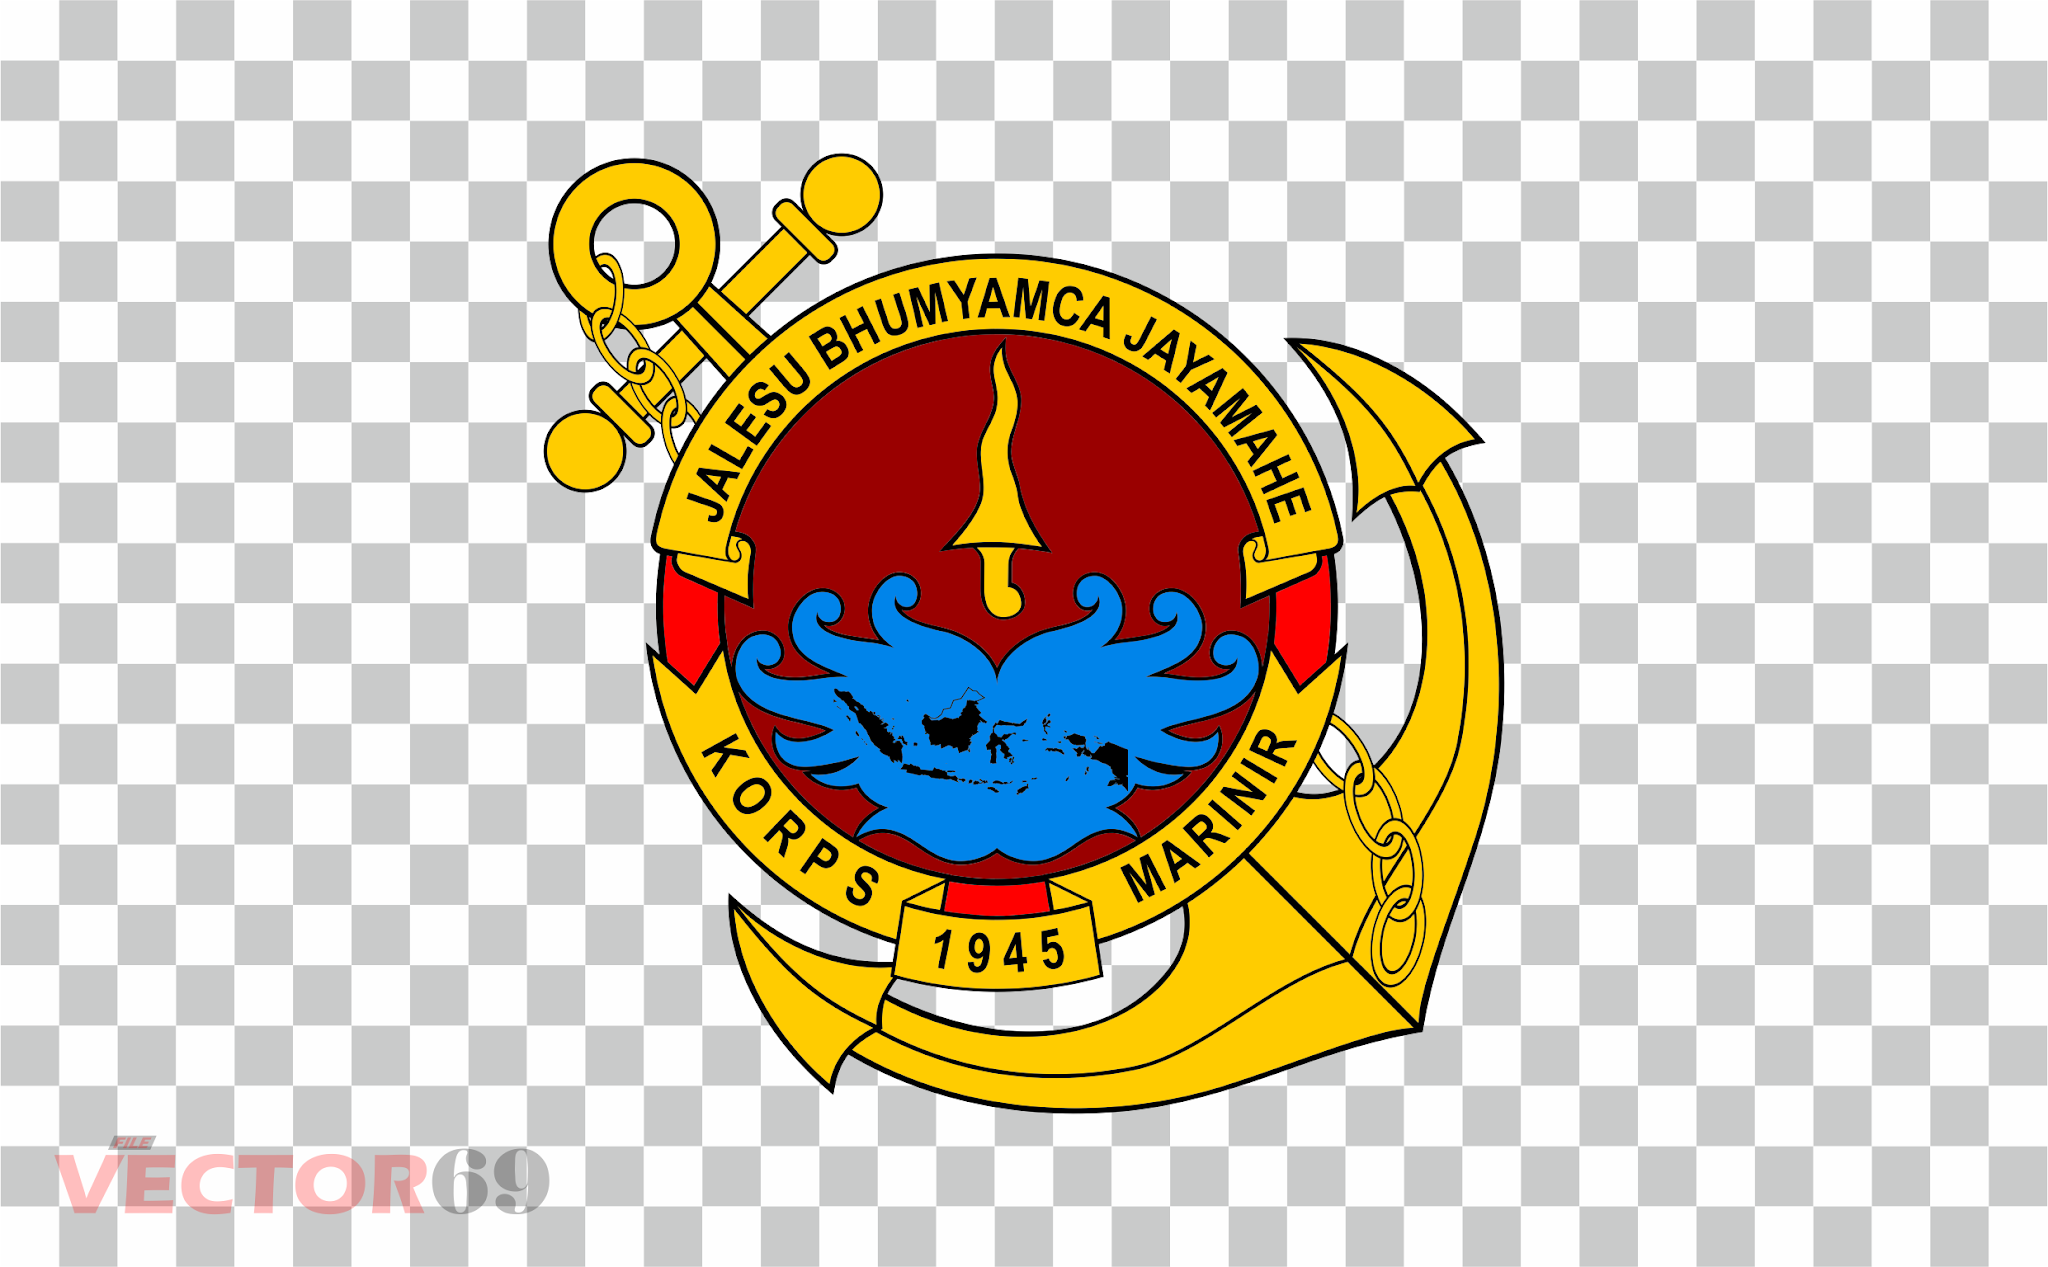 Korps Marinir Indonesia Logo - Download Vector File PNG (Portable Network Graphics)